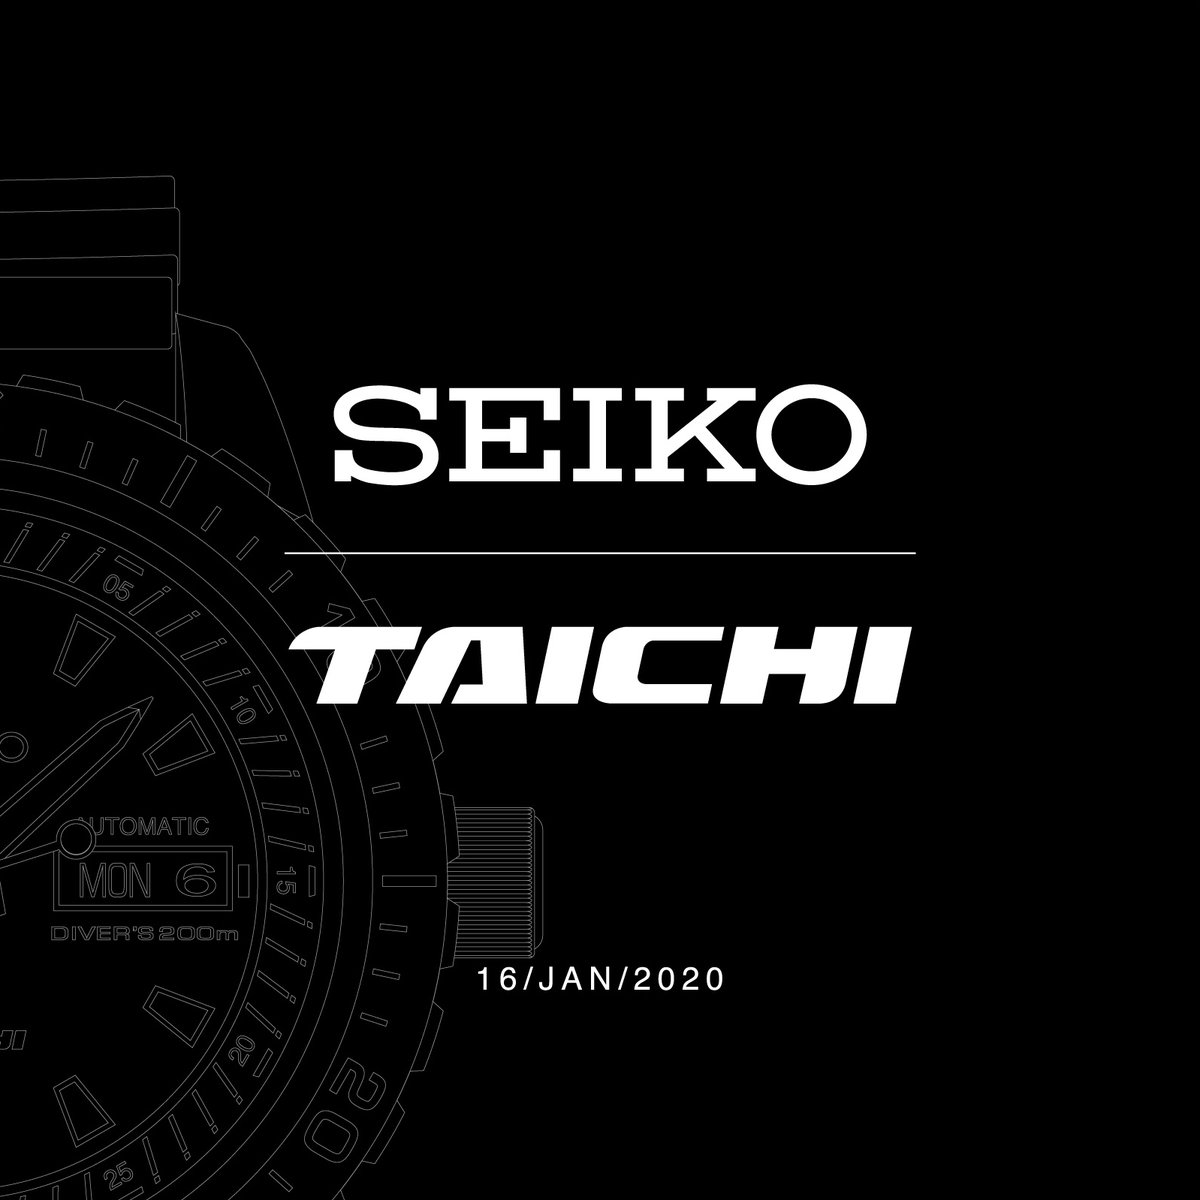 【Seiko × TAICHI】

1月16日に特設サイトOPEN！

#seiko 
#diverscuba 
#watch 
#watches 
#diverswatch 
#automatic
#セイコー 
#メカニカル 
#limitededition 
#TAICHI 
#rstaichi 
#rsタイチ 
#moto 
#touring
#motofashin
#motorcyclephotography